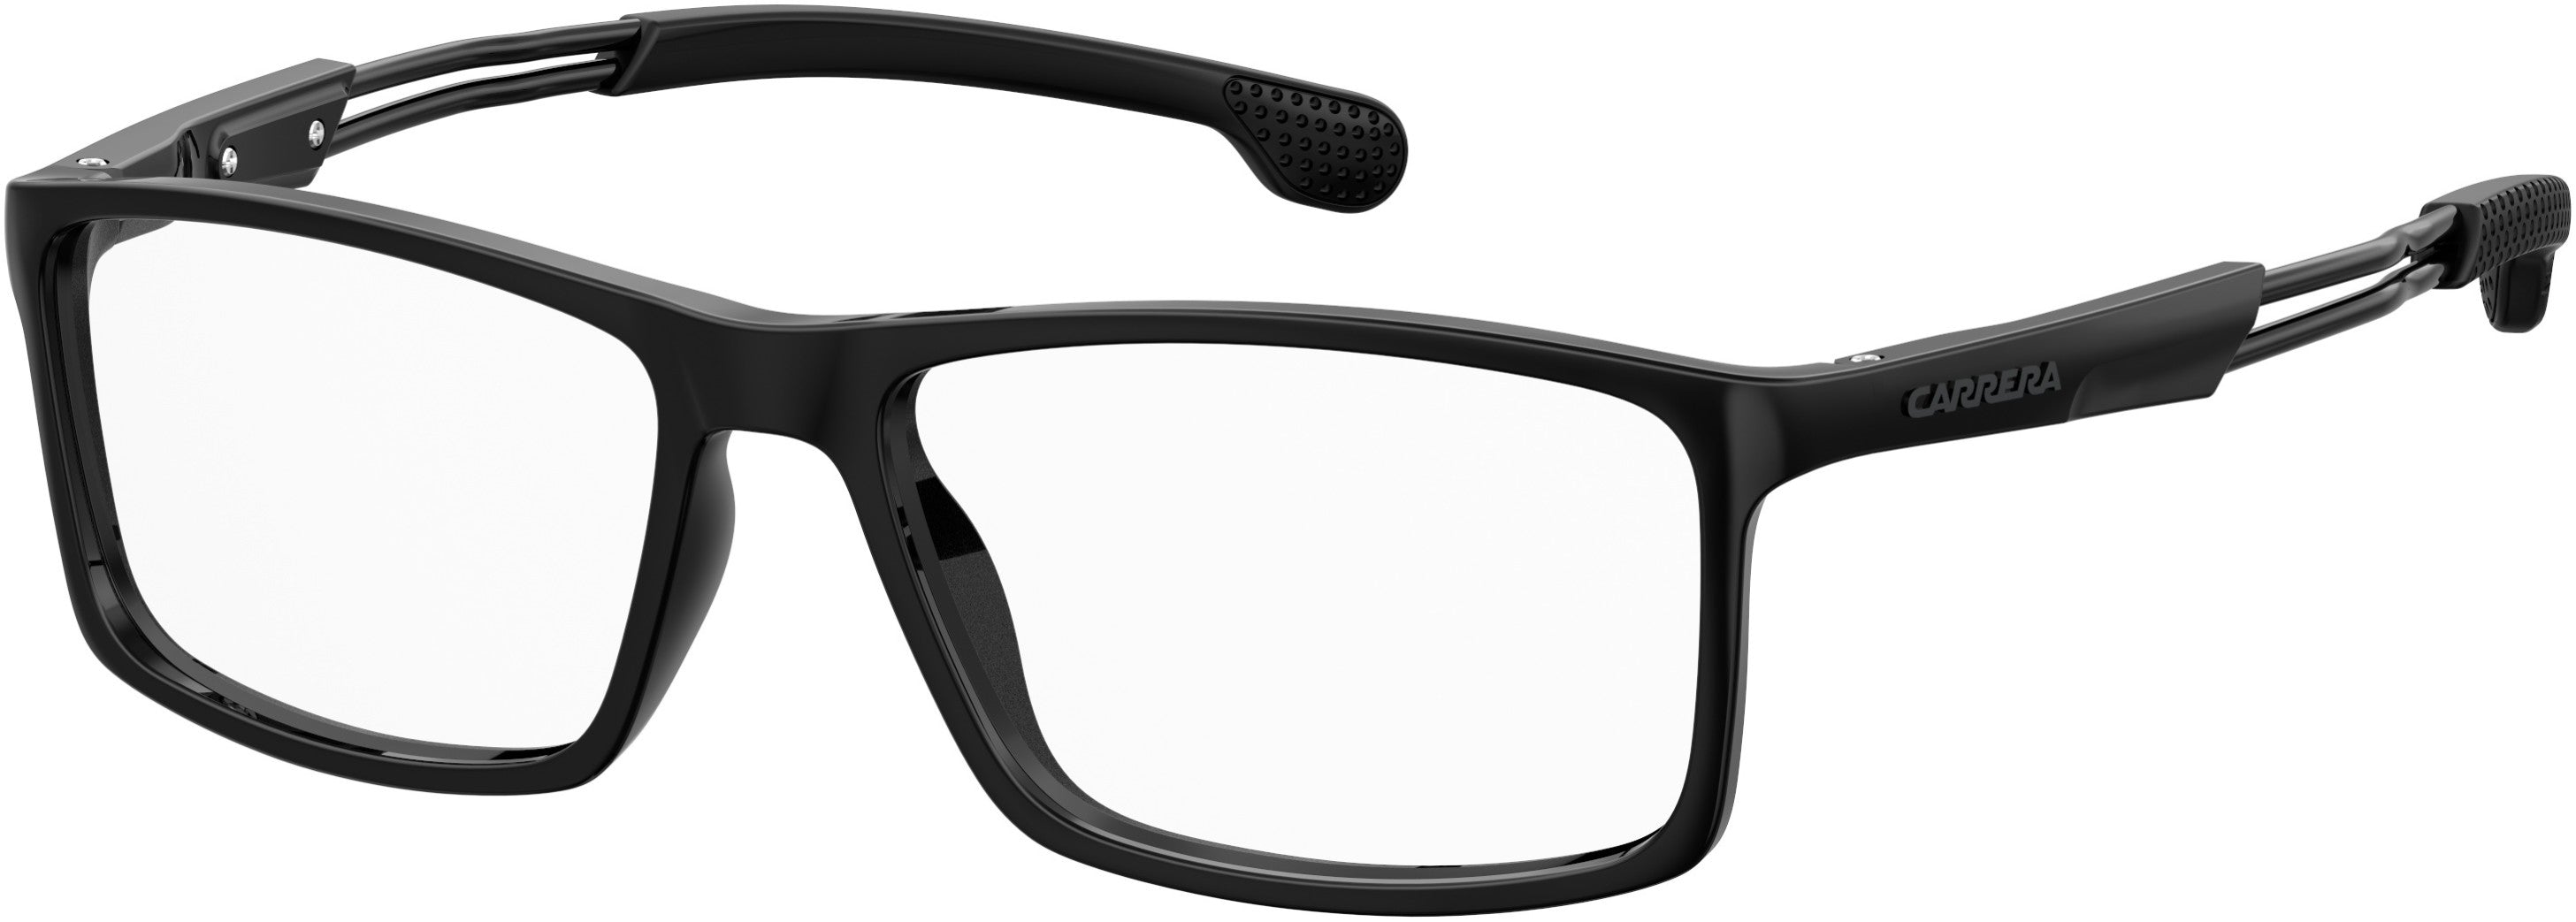  Carrera 4410 Rectangular Eyeglasses 0807-0807  Black (00 Demo Lens)